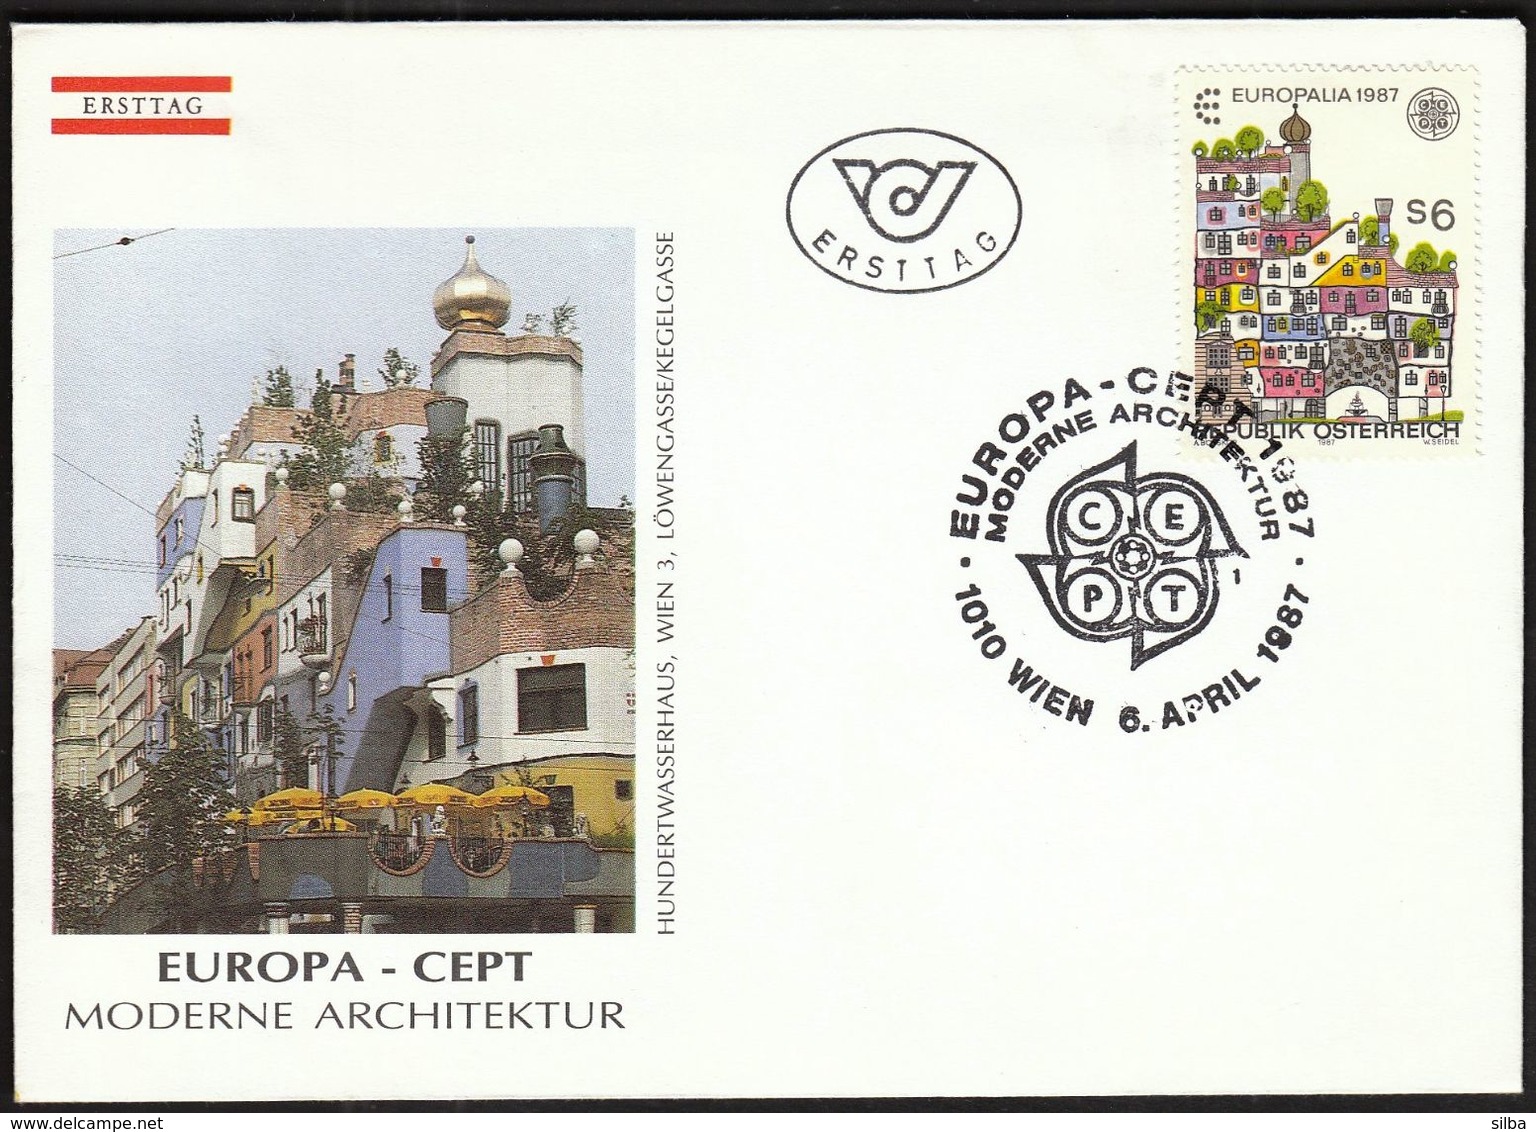 Austria Vienna 1987 / Europa CEPT / Modern Architecture / FDC / Cancel No. 1 - 1987